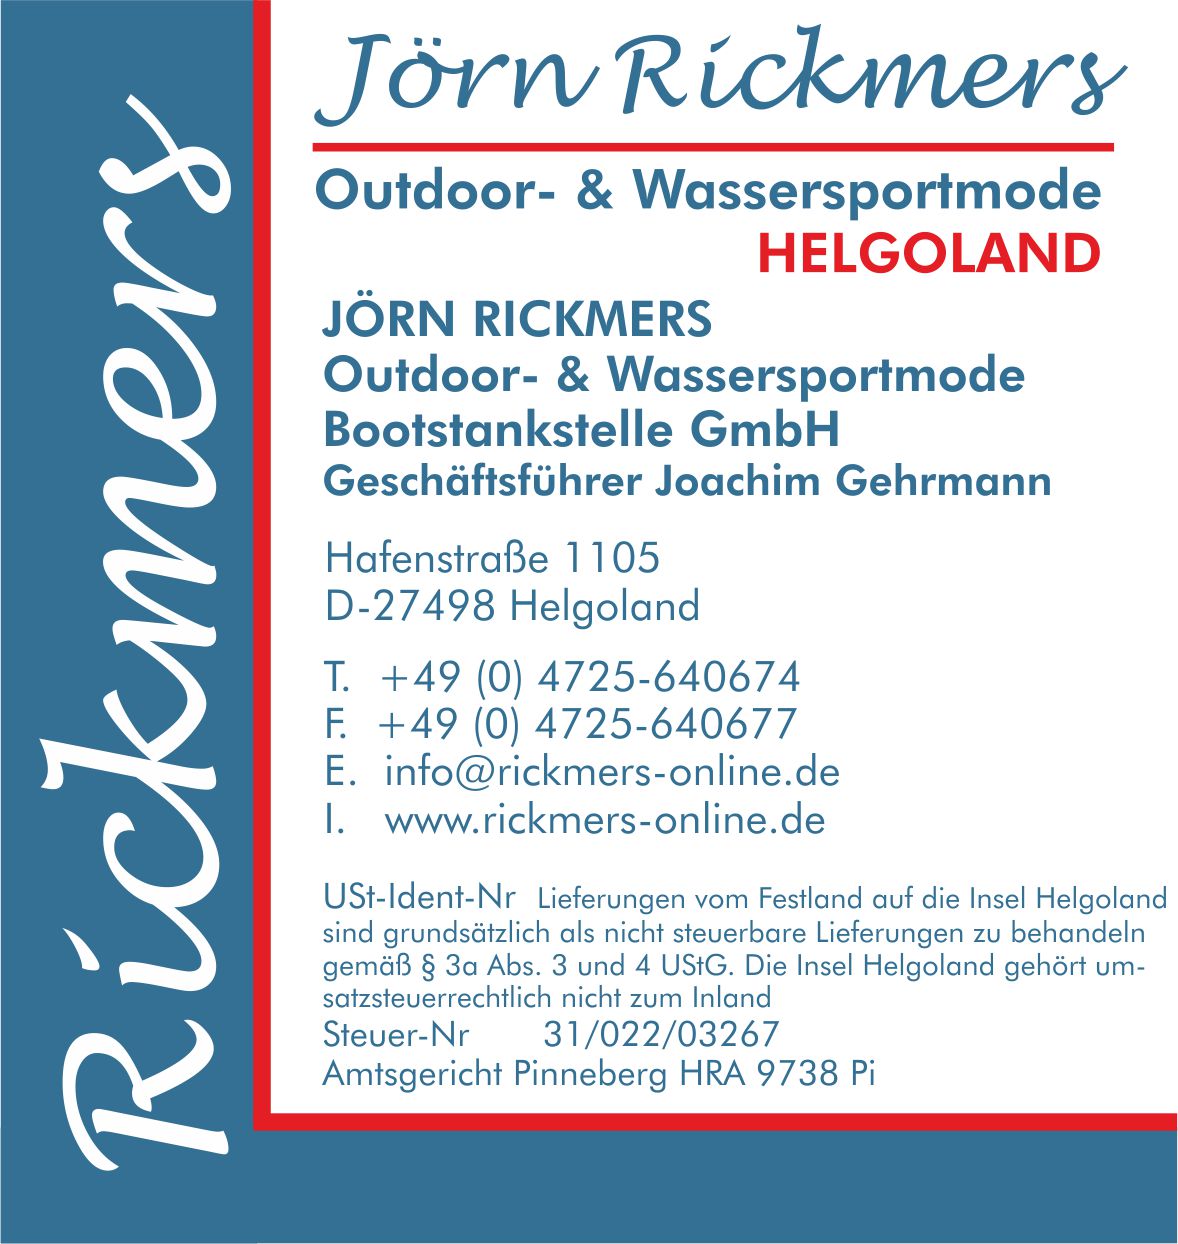 Jörn Rickmers GmbH